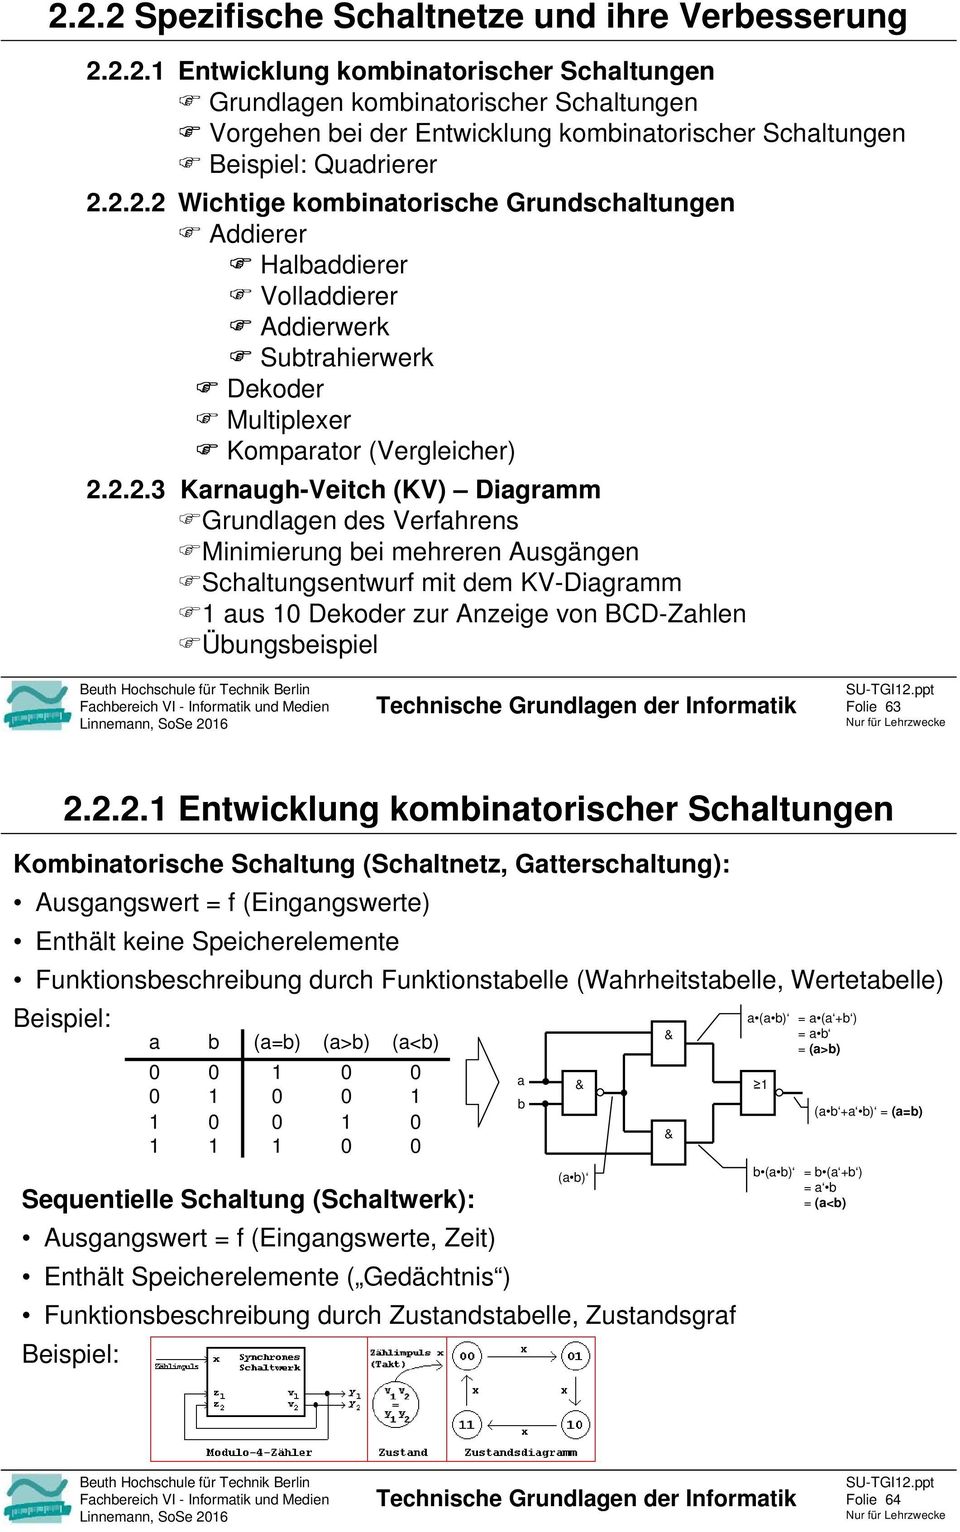 Medien Linnemnn, SoSe 26 Tehnishe Grundlgen der Informtik SU-TGI2.